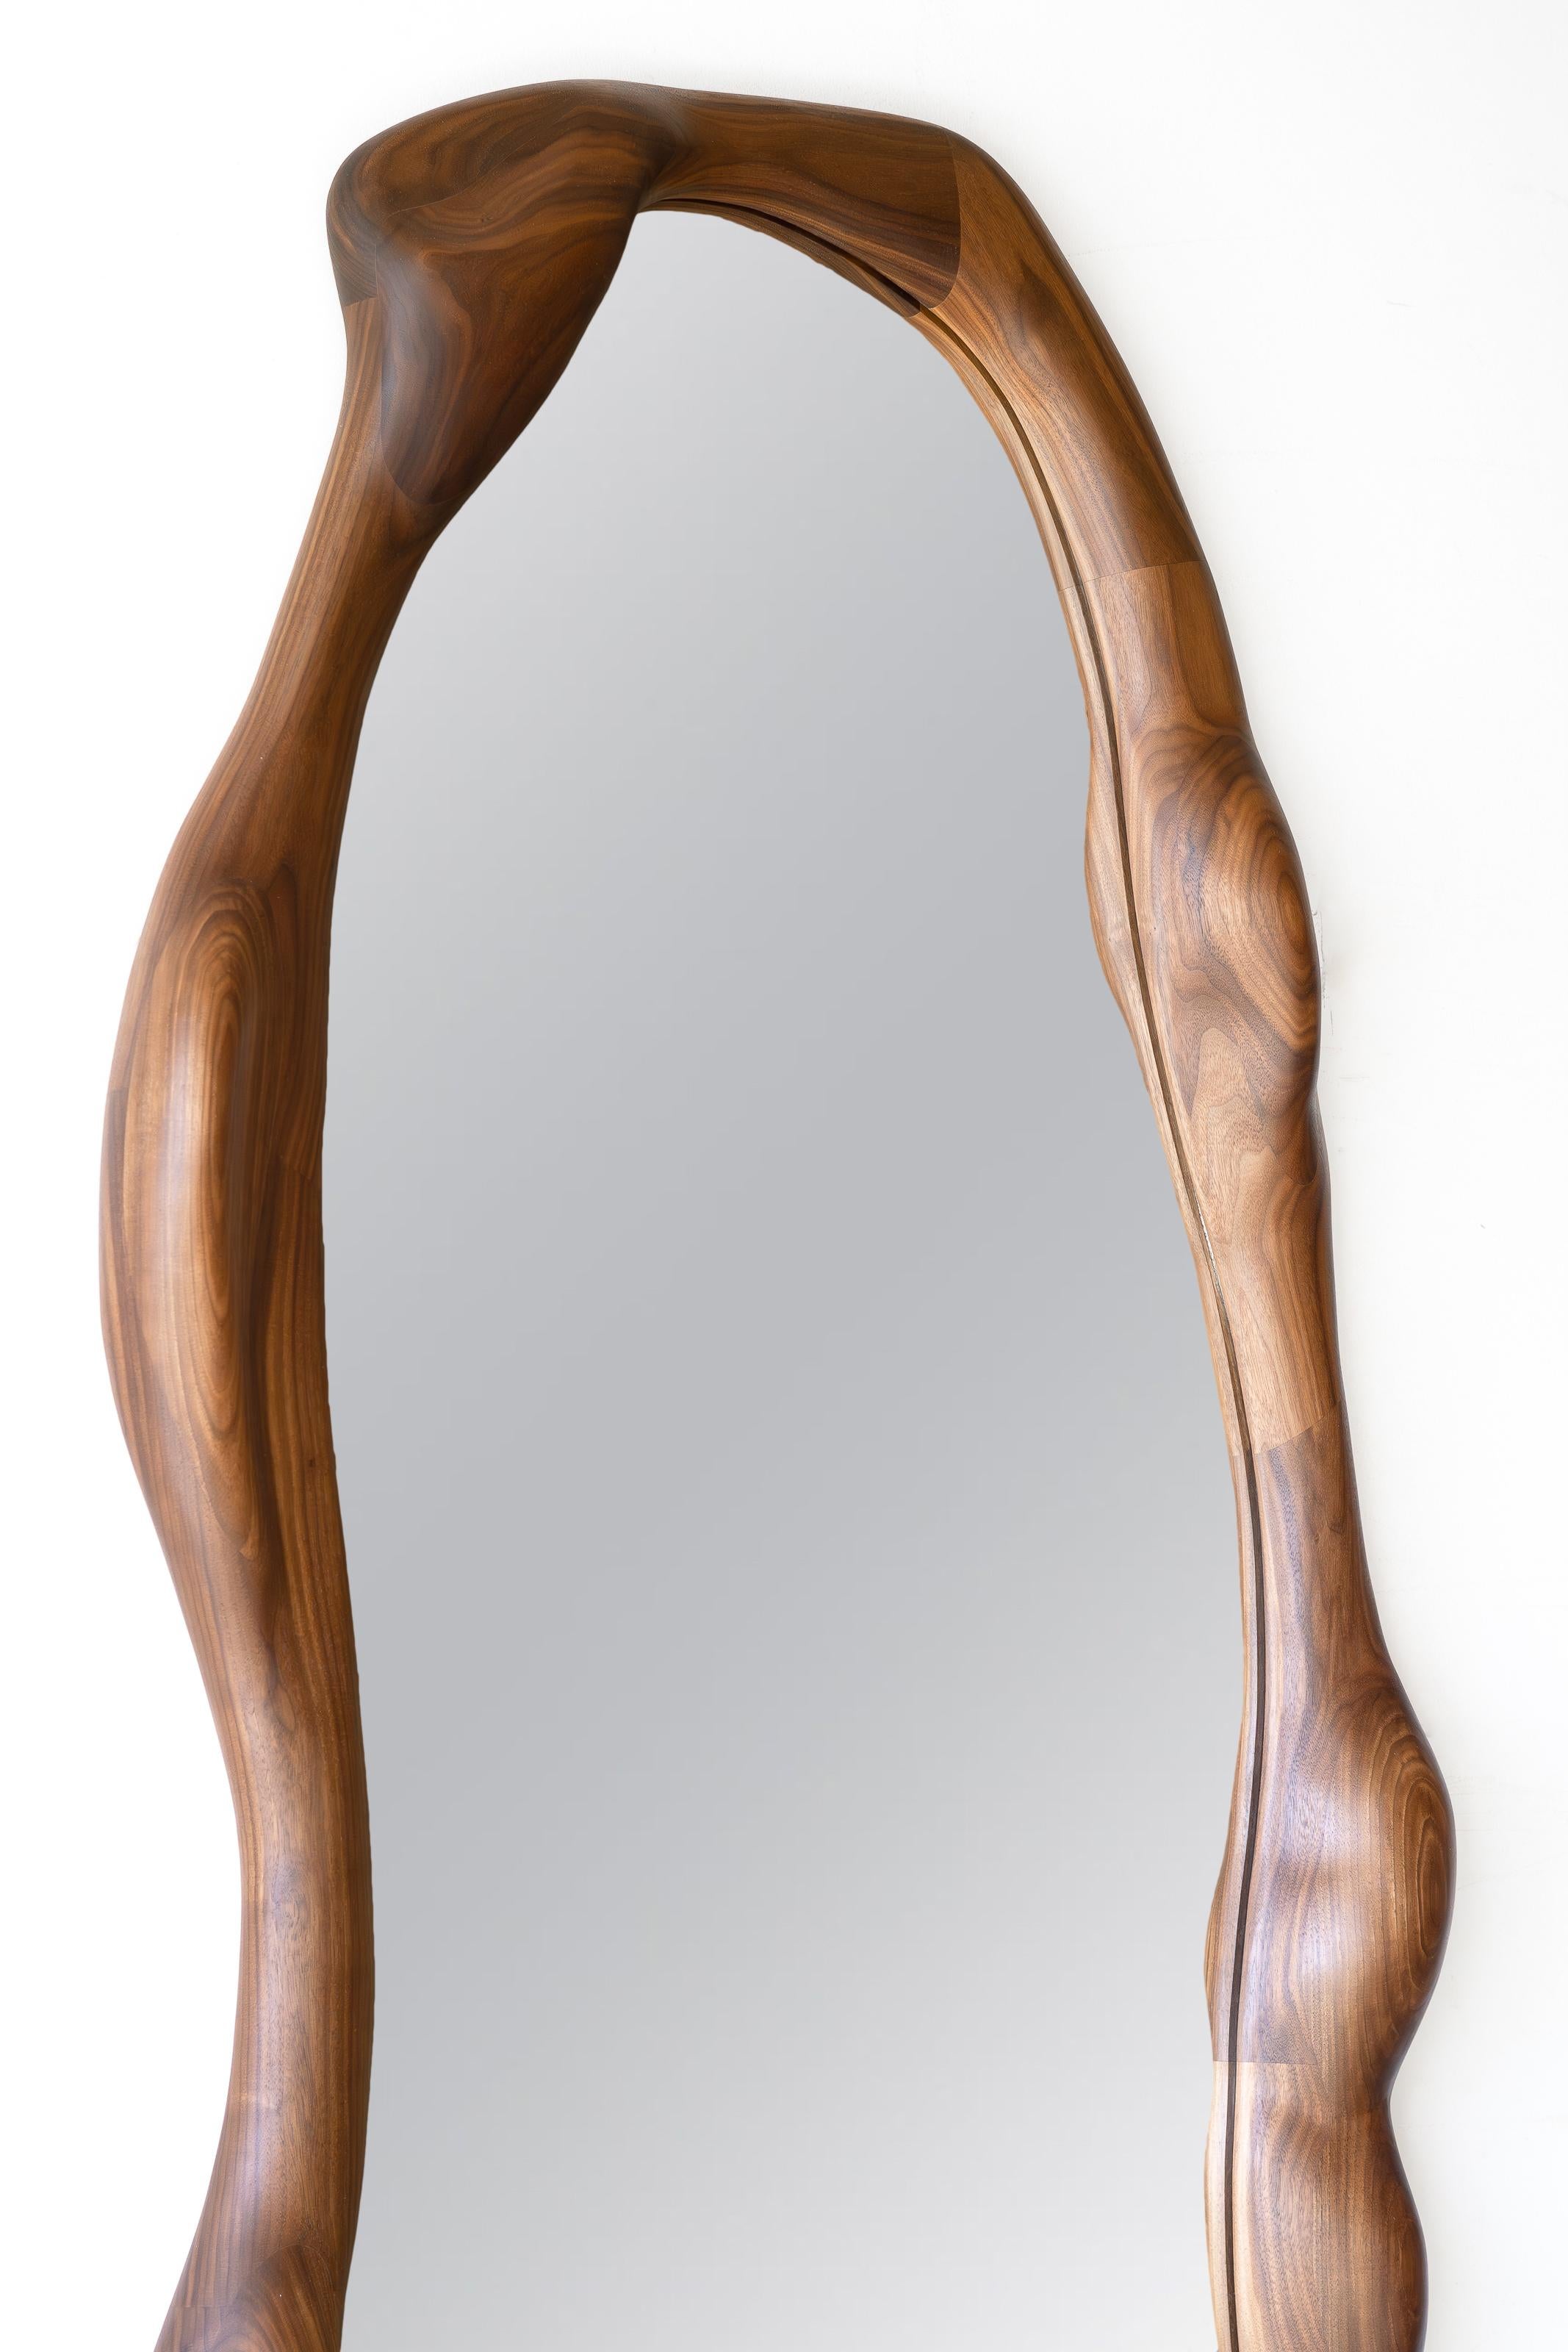 Organique Grand miroir sculptural en Wood Wood en vente